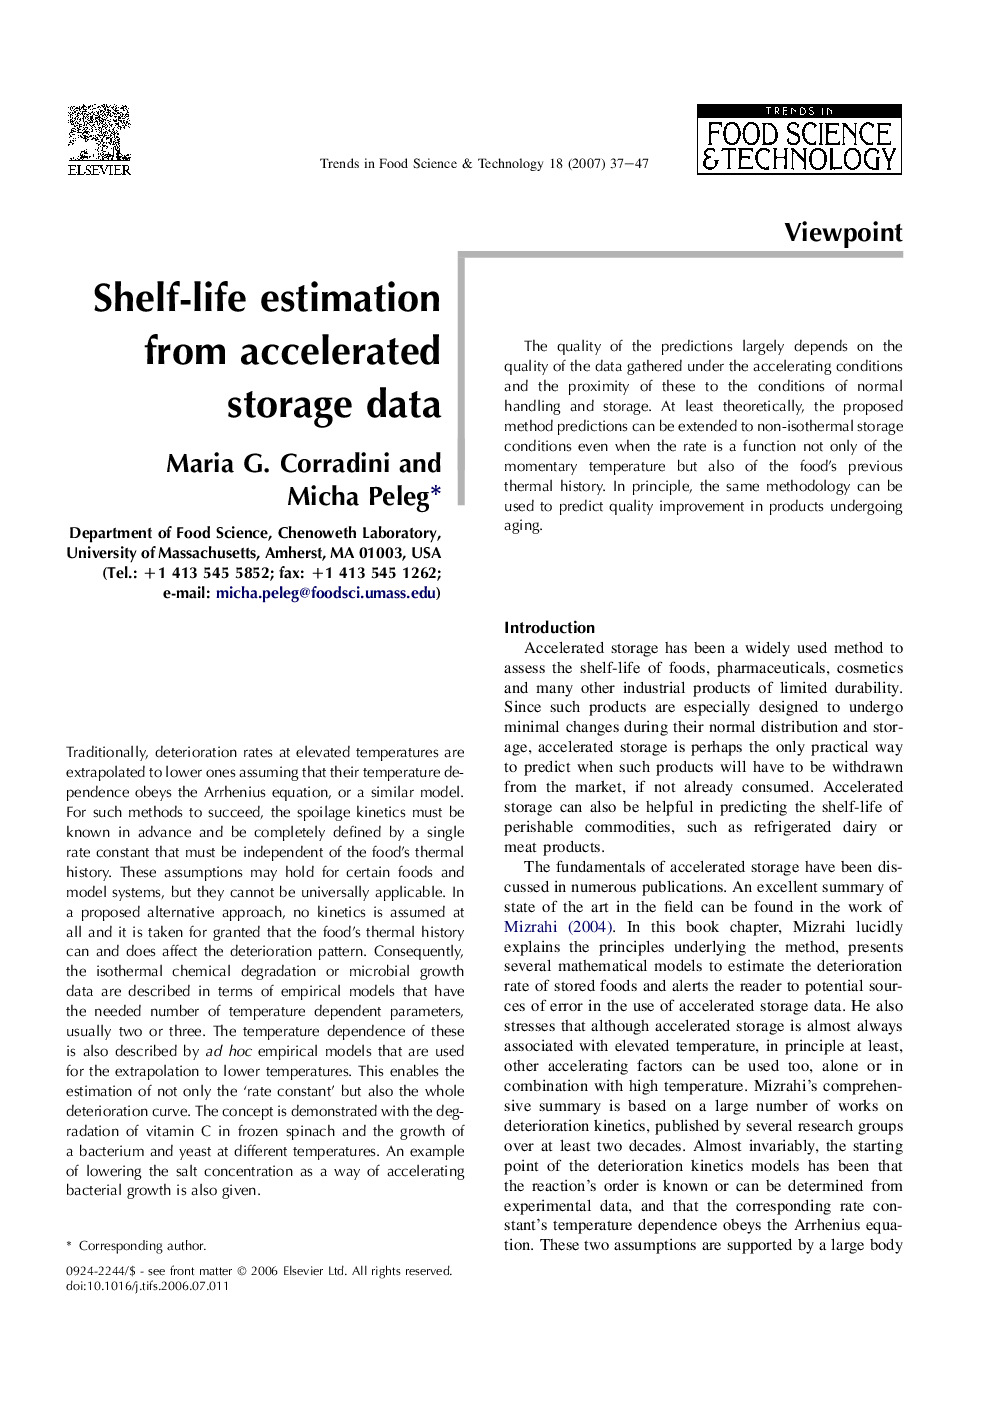 Shelf-life estimation from accelerated storage data